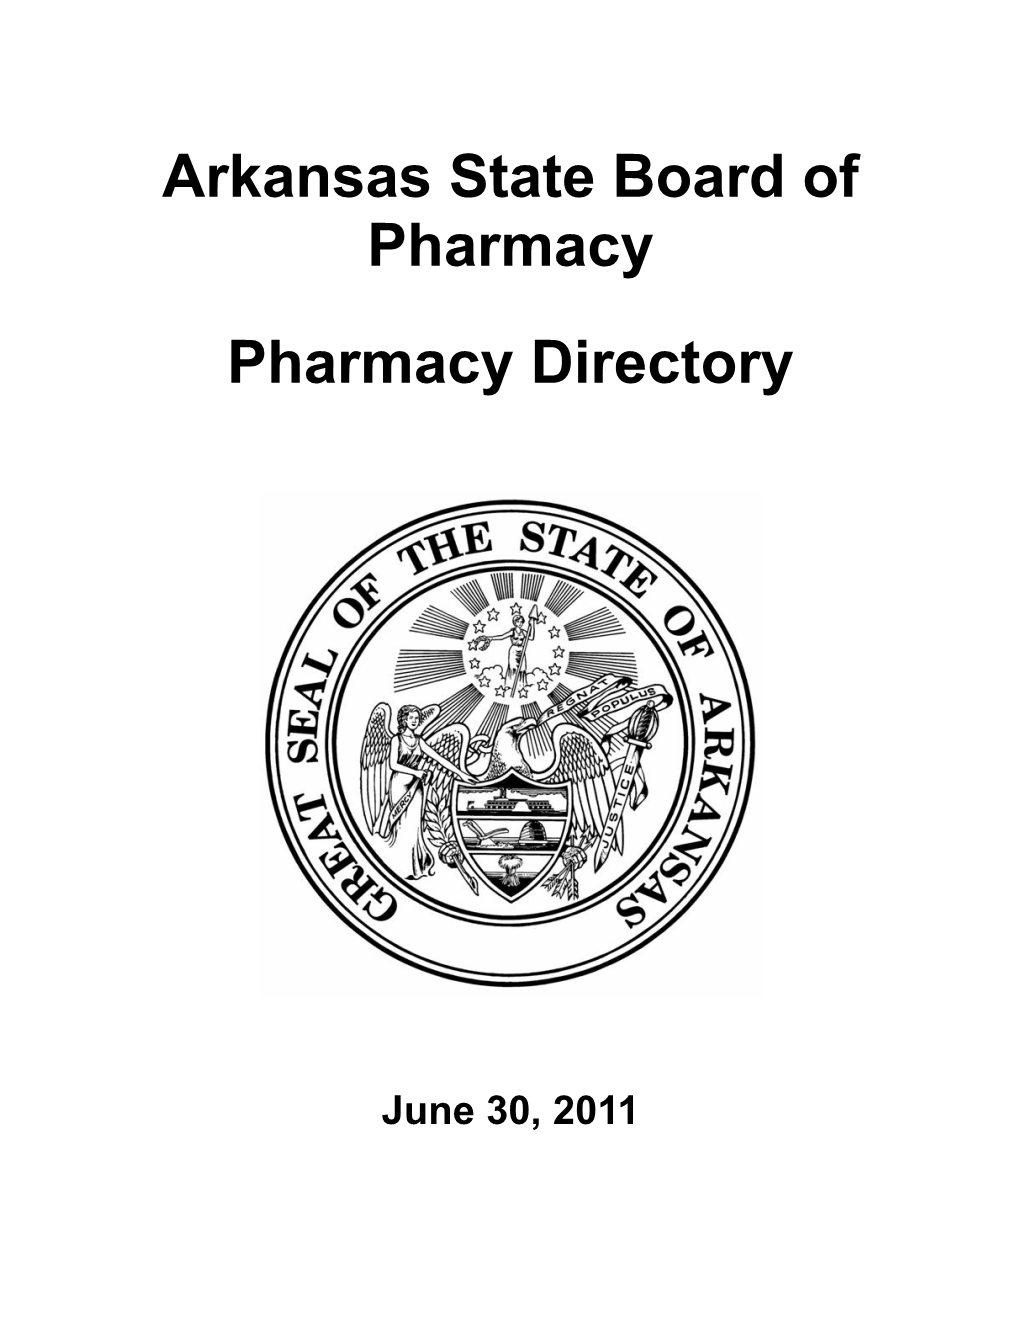 Arkansas State Board of Pharmacy Pharmacy Directory